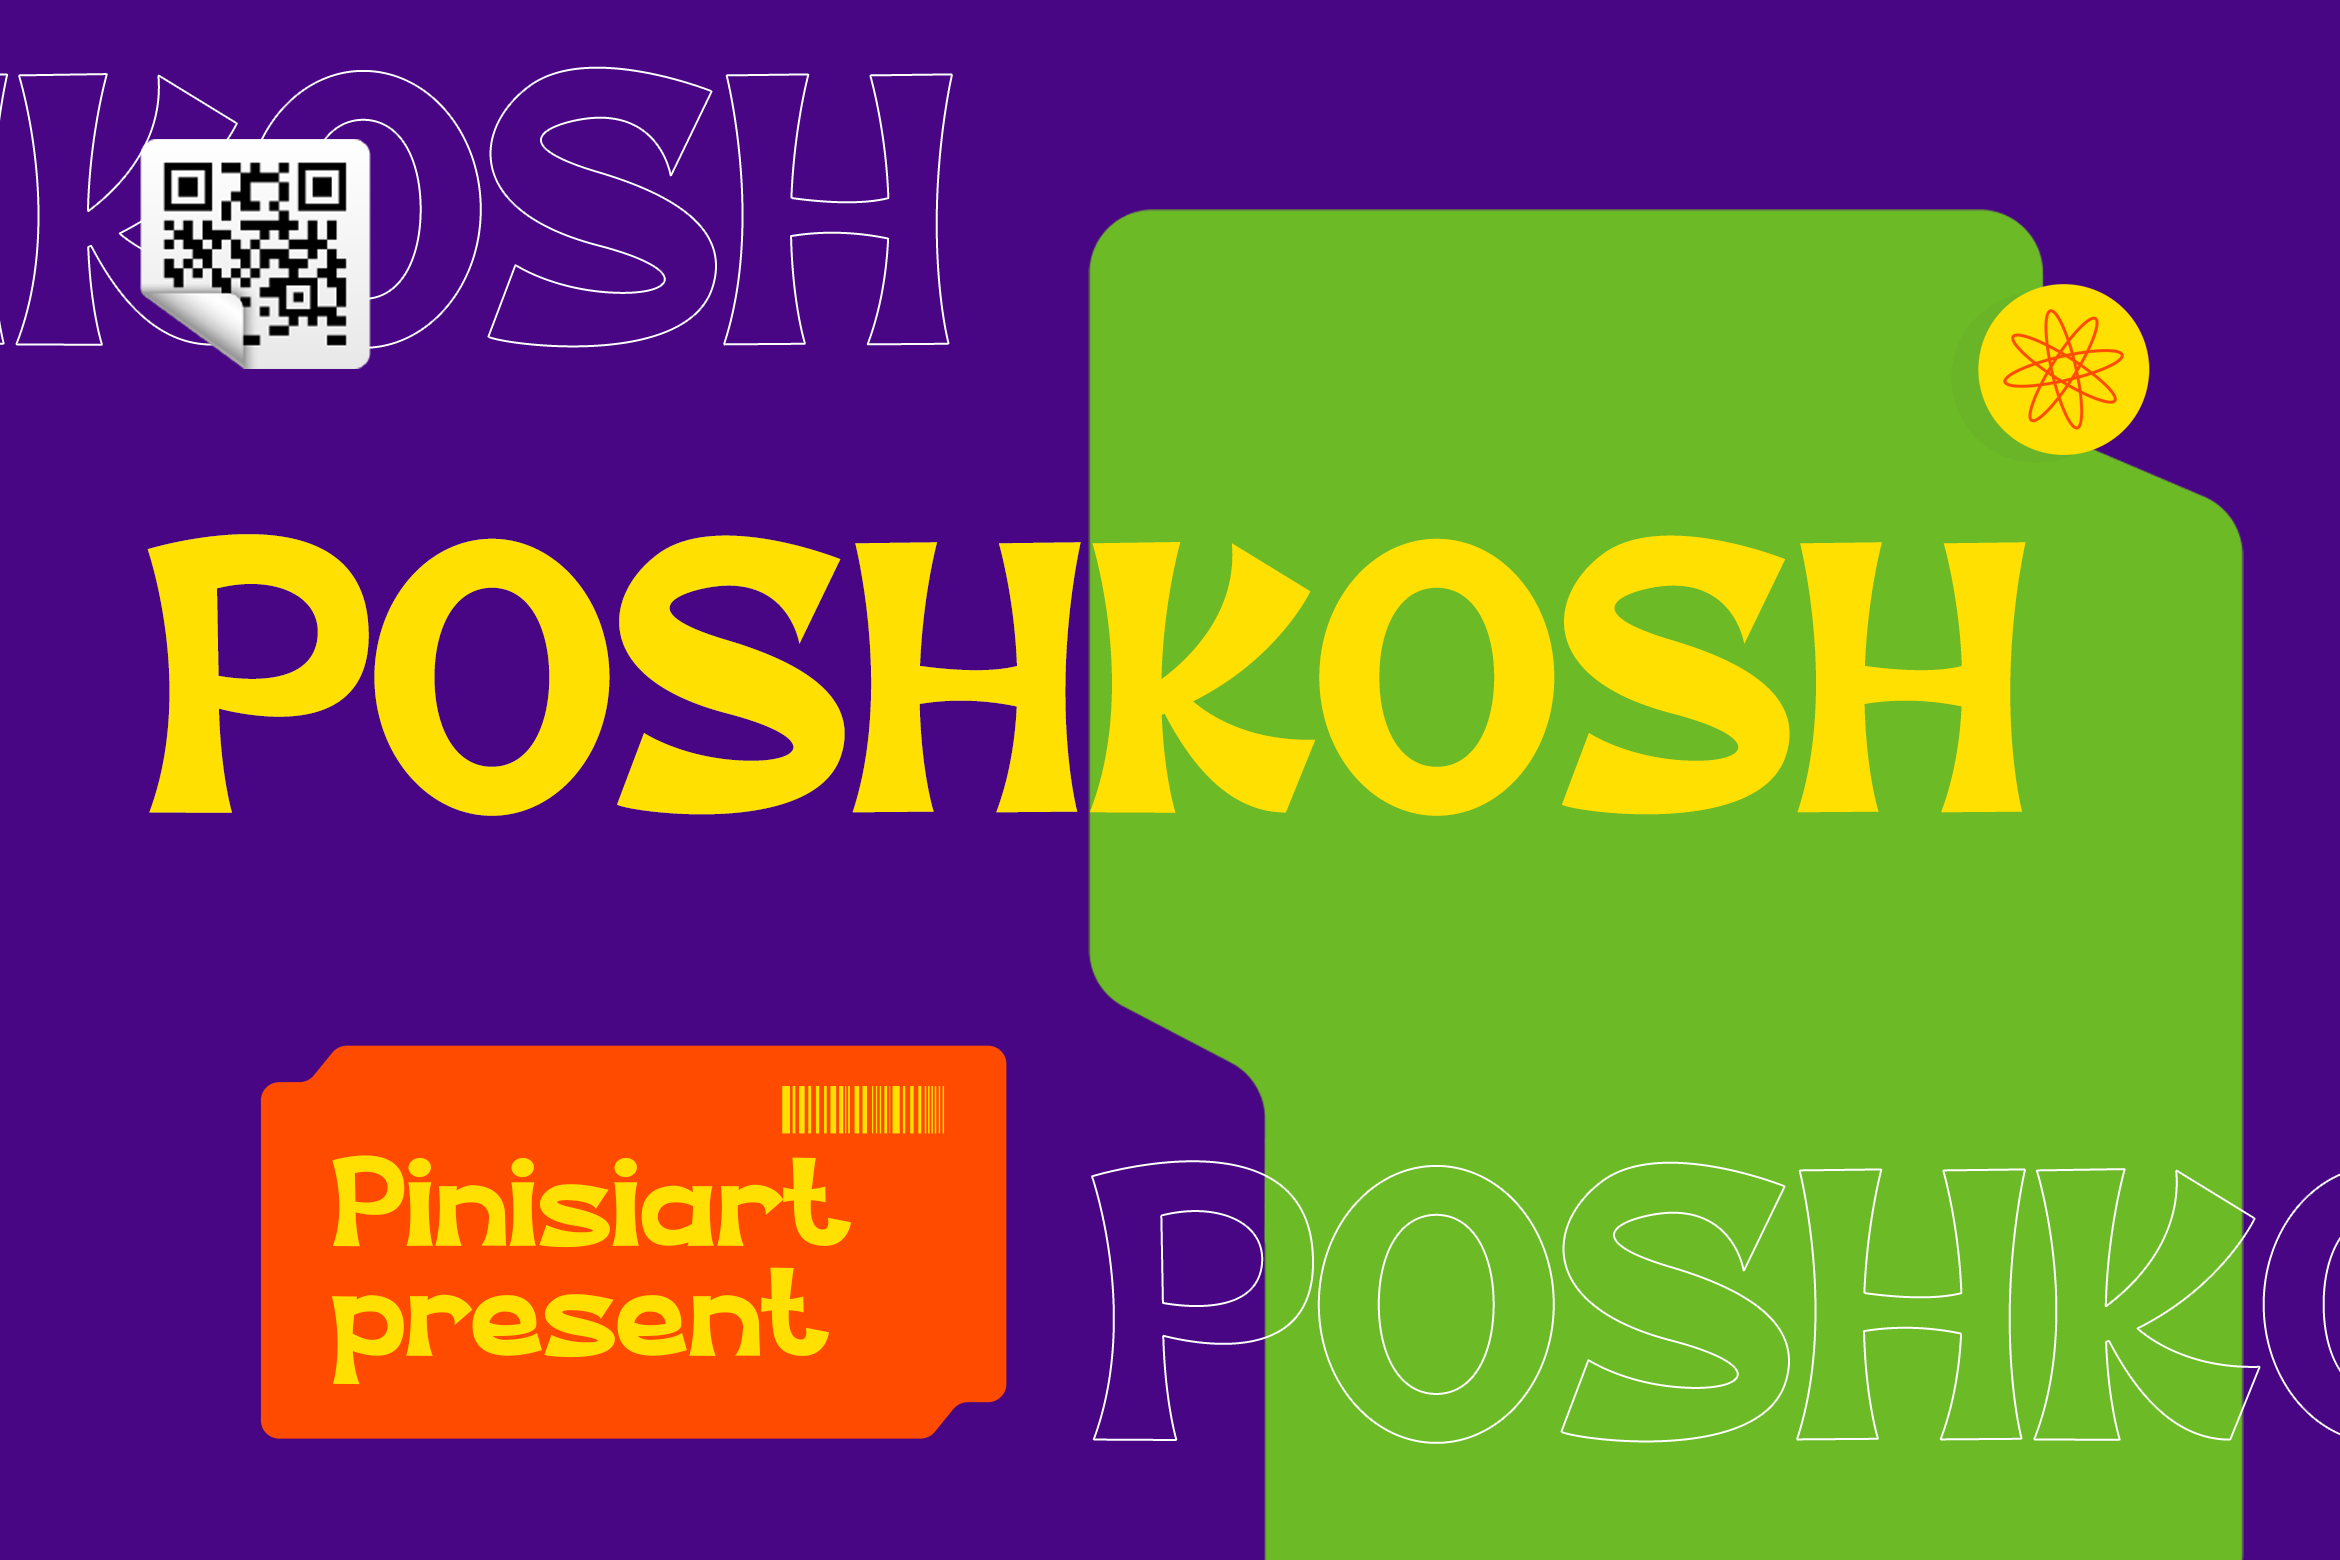 POSHKOSH